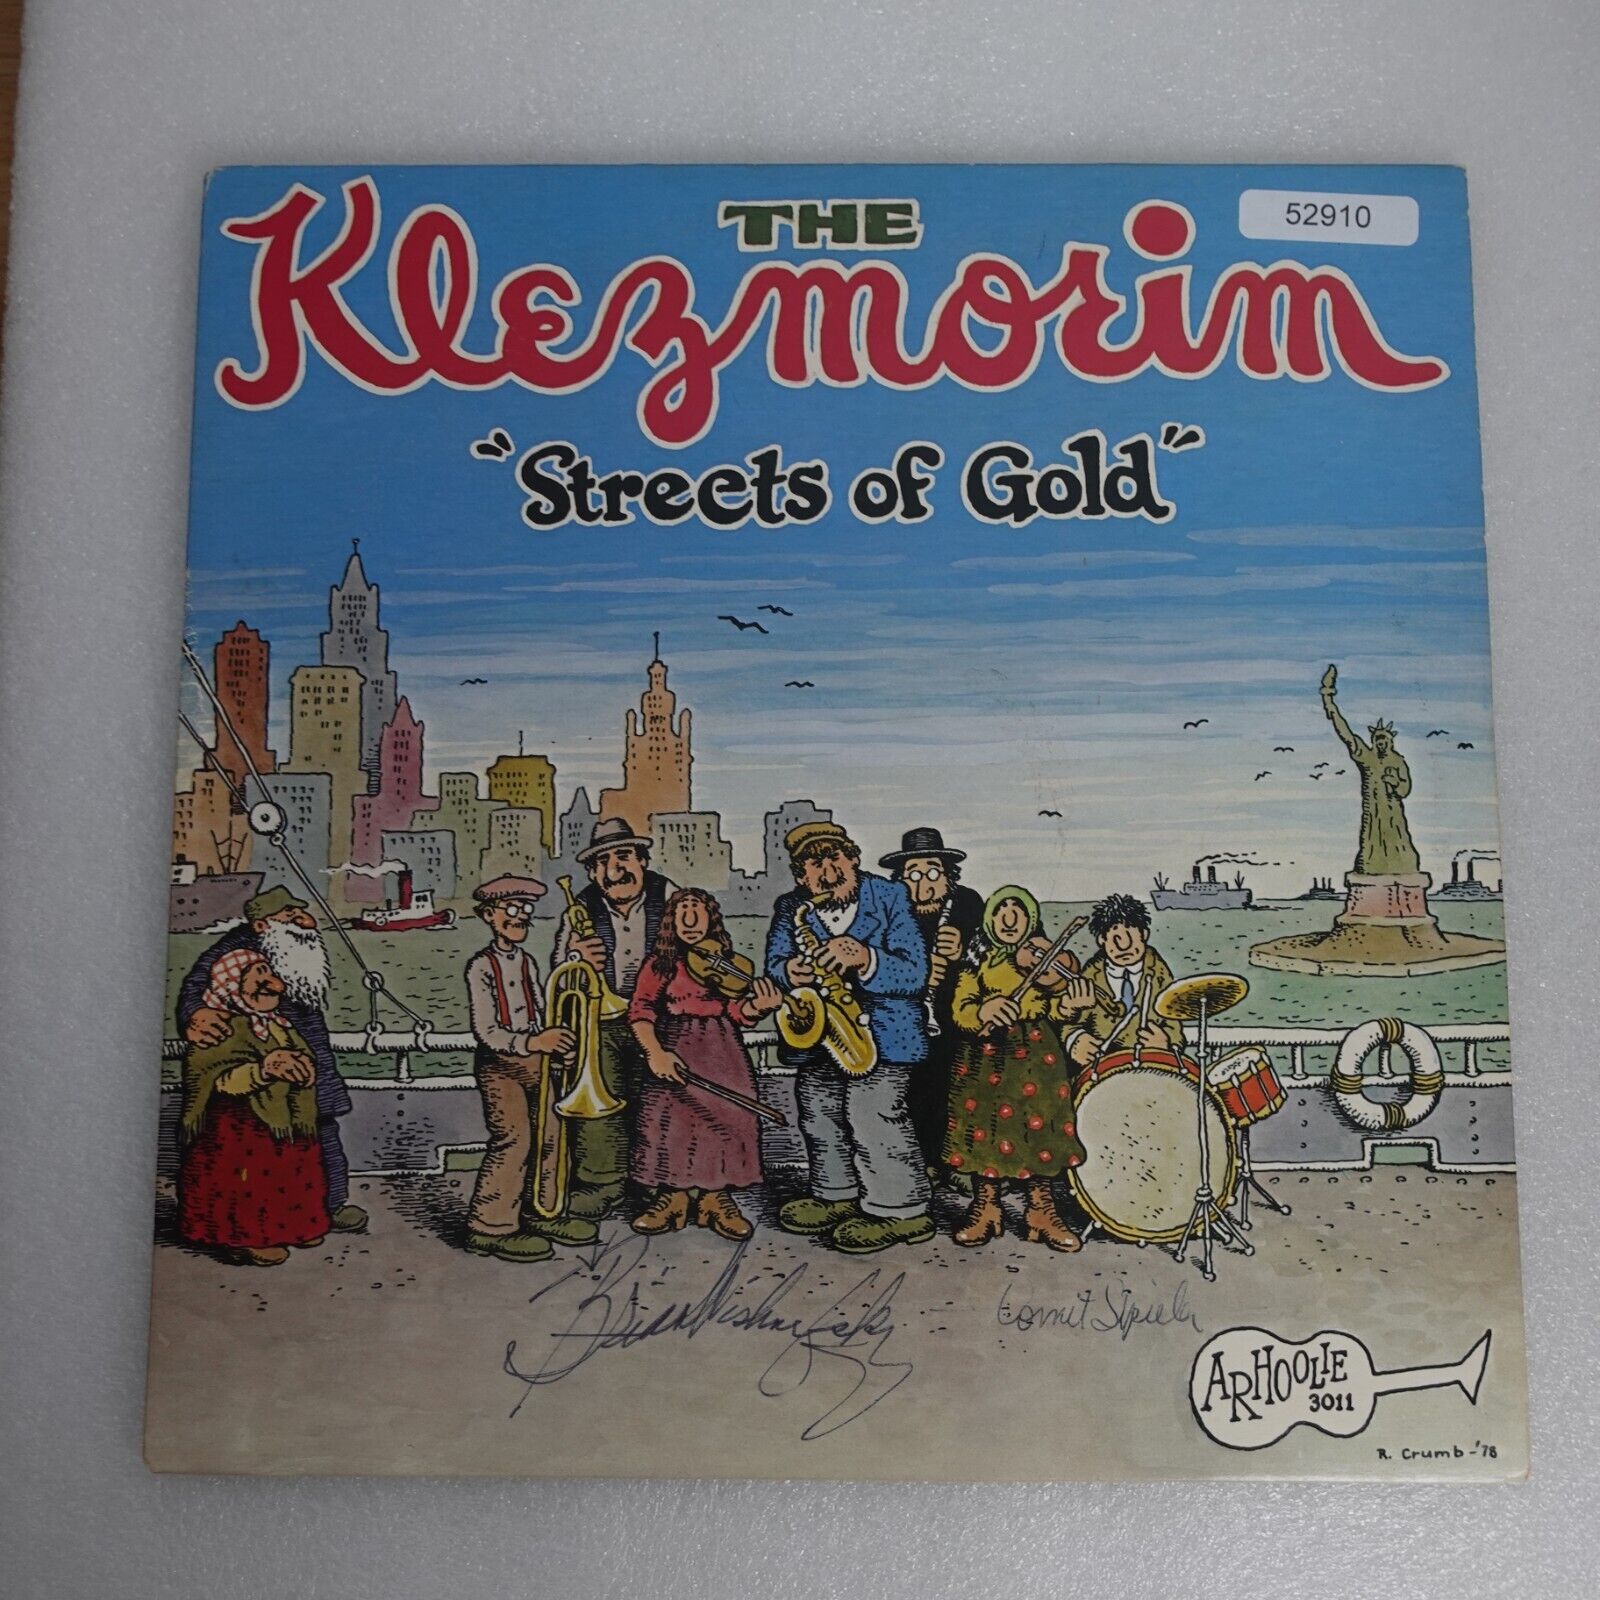 The Klezmorim Streets Of Gold LP Vinyl Record Album